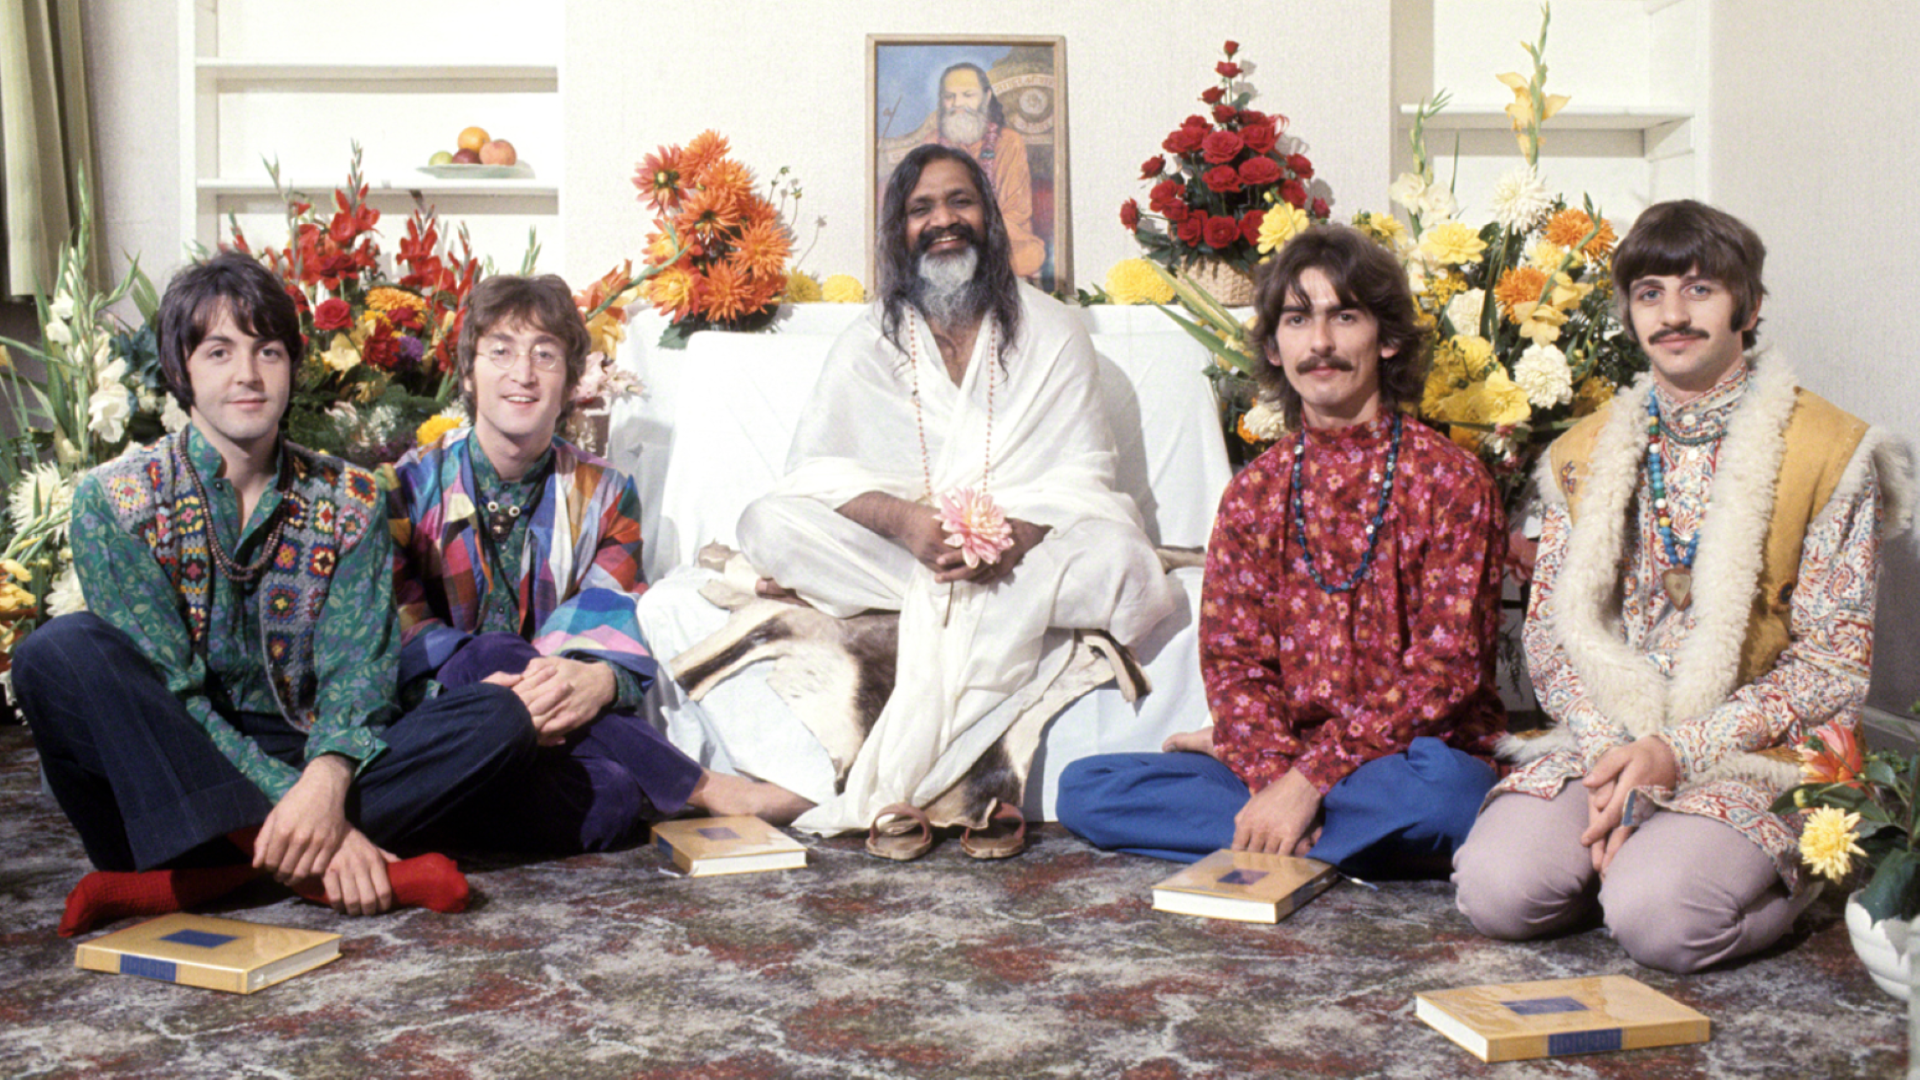 The Beatles Paul McCartney George Harrison John Lennon Ringo Starr Maharishi Mahesh Yogi 1920x1080